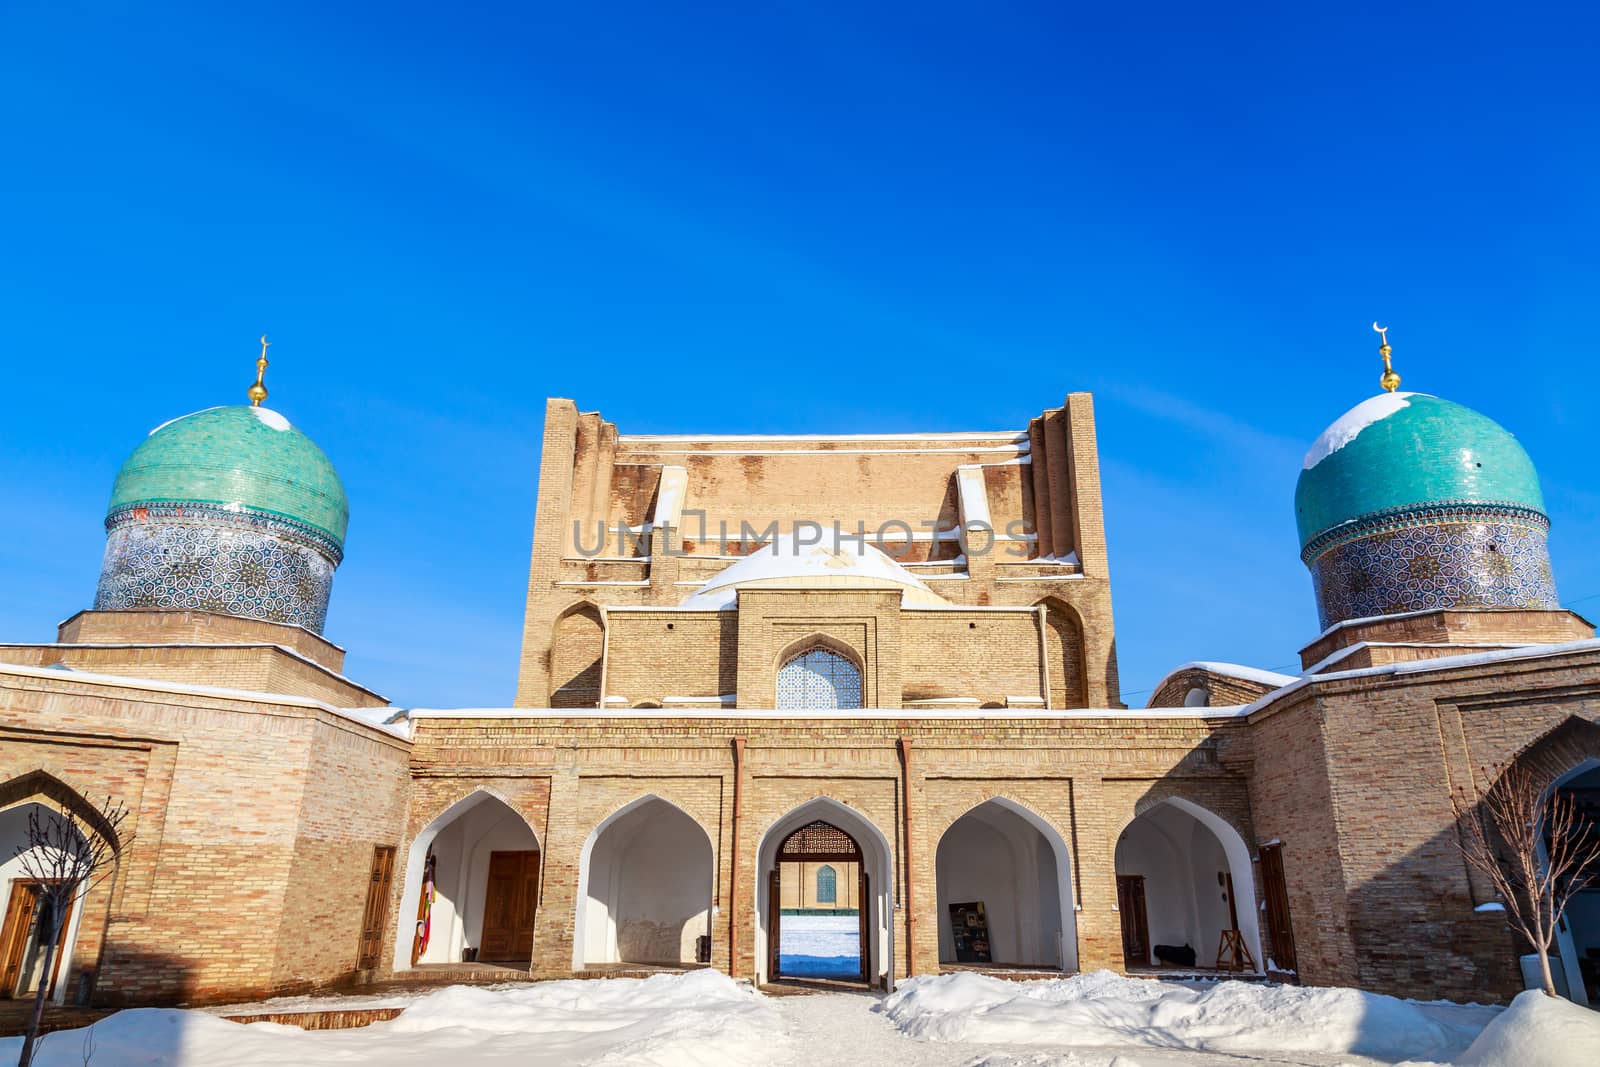 Snow and blue domes and minarets of Hazrati Imam complex, religious center of Tashkent, Uzbekistan